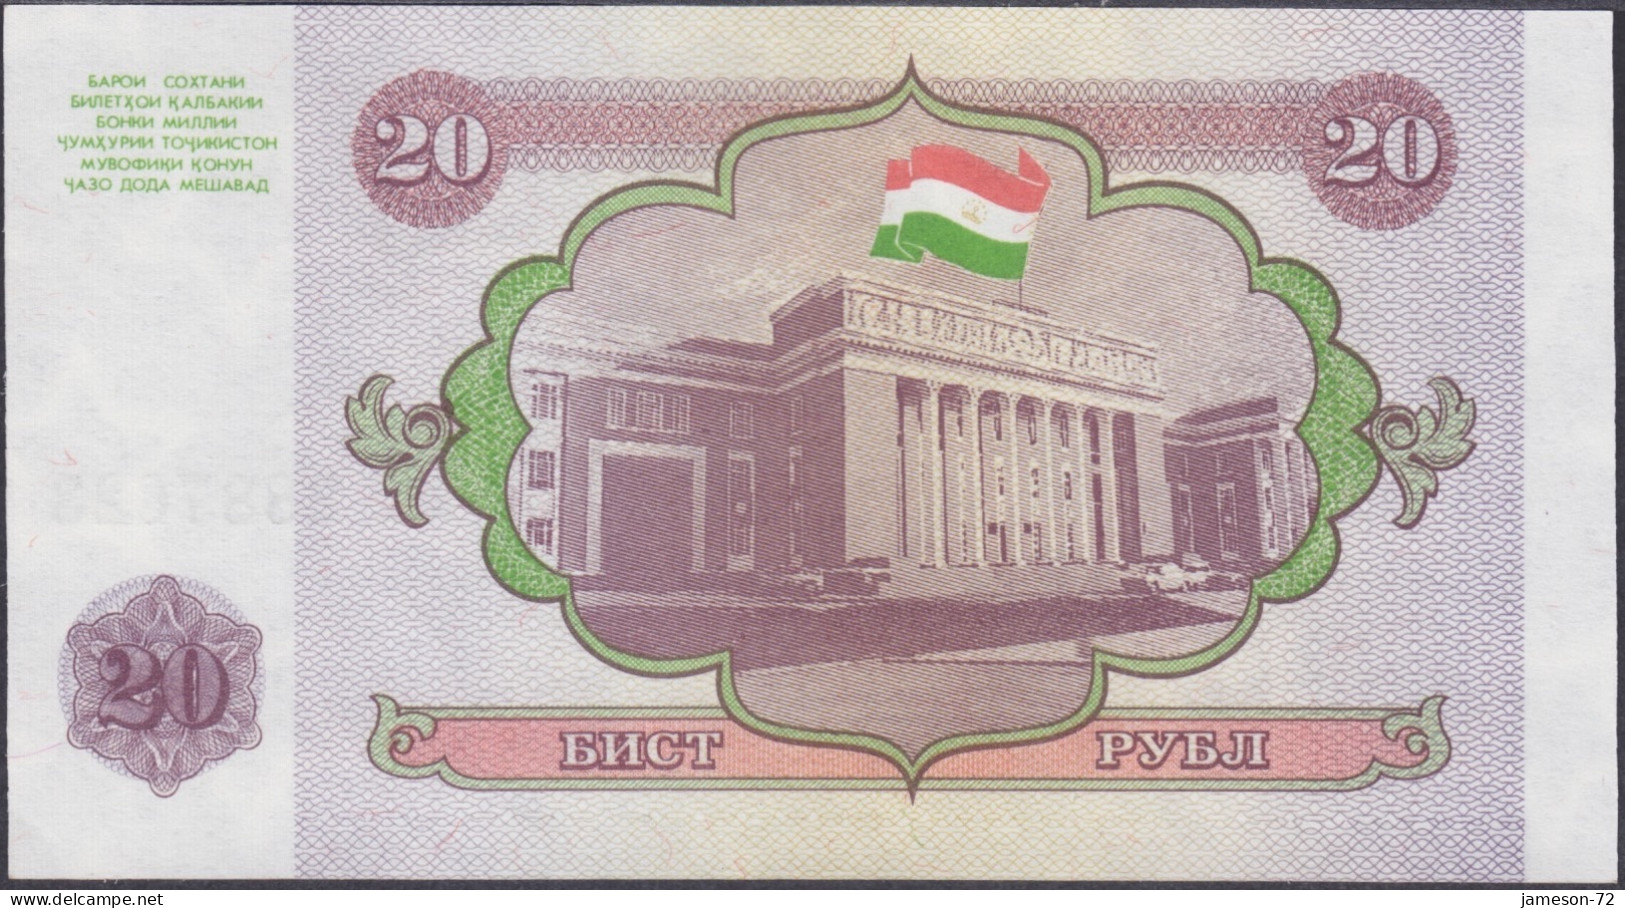 TAJIKISTAN - 20 Rubles 1994 P# 4 Asia Banknote - Edelweiss Coins - Tagikistan